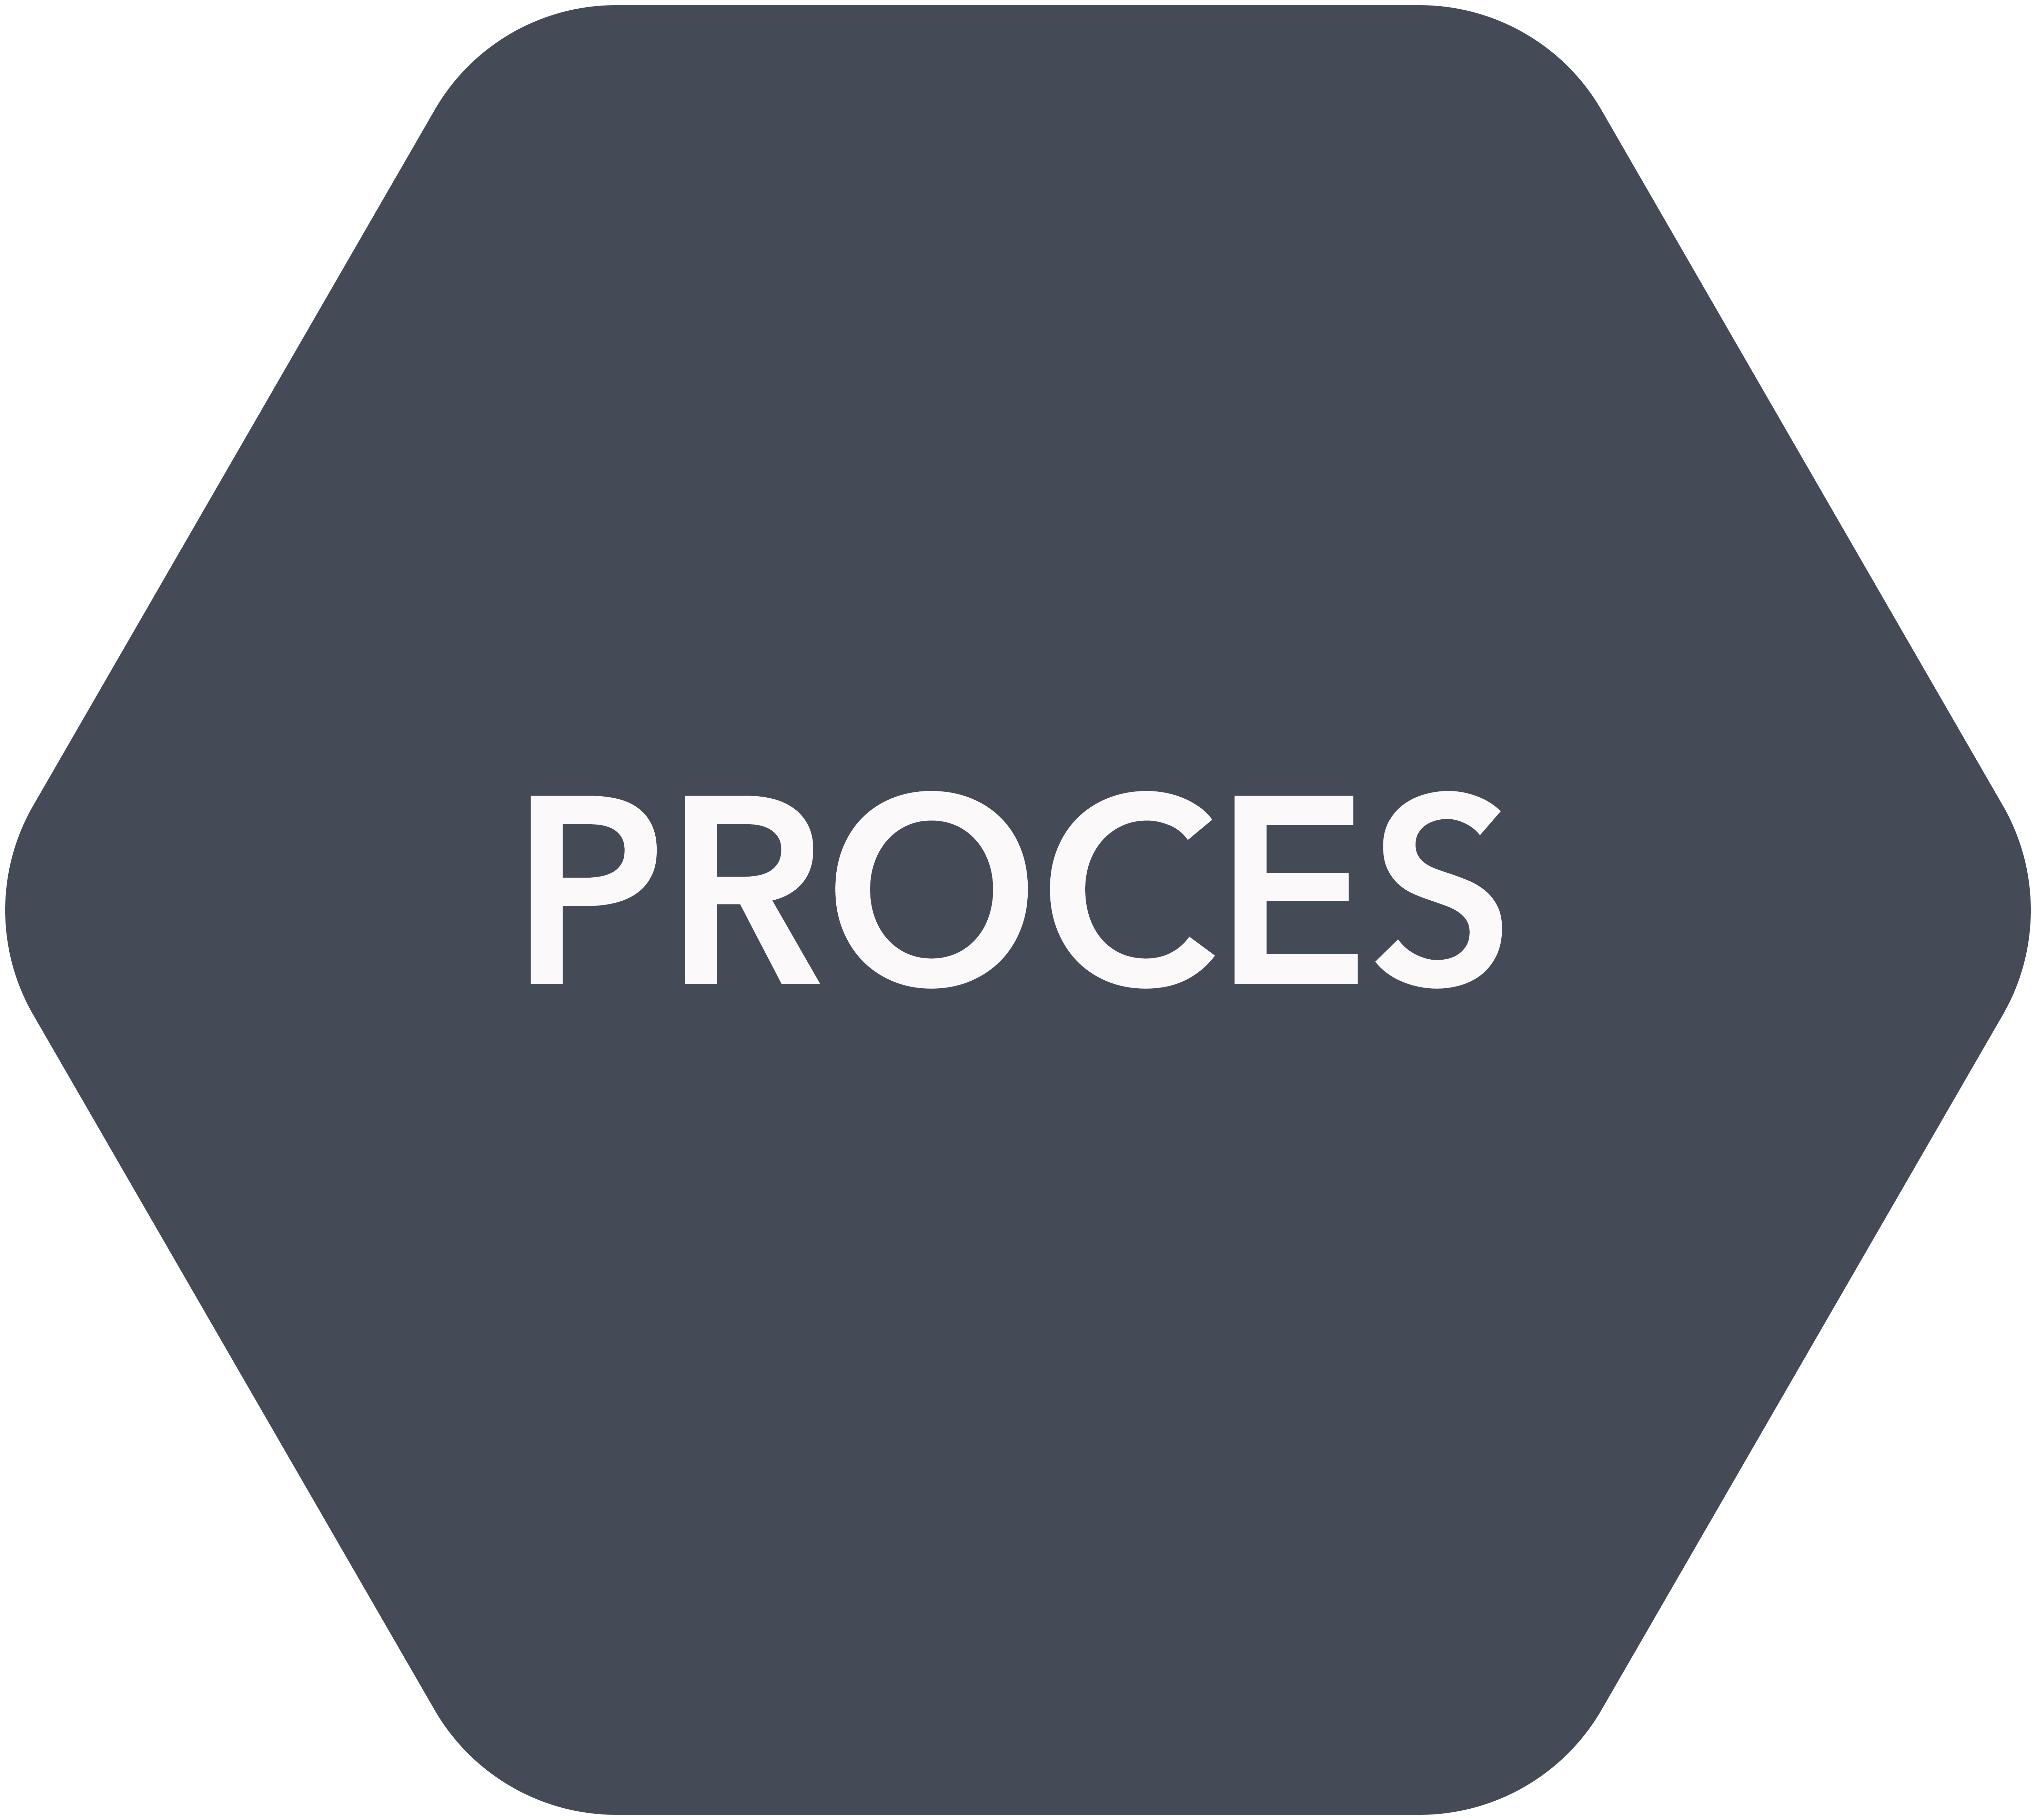 Proces